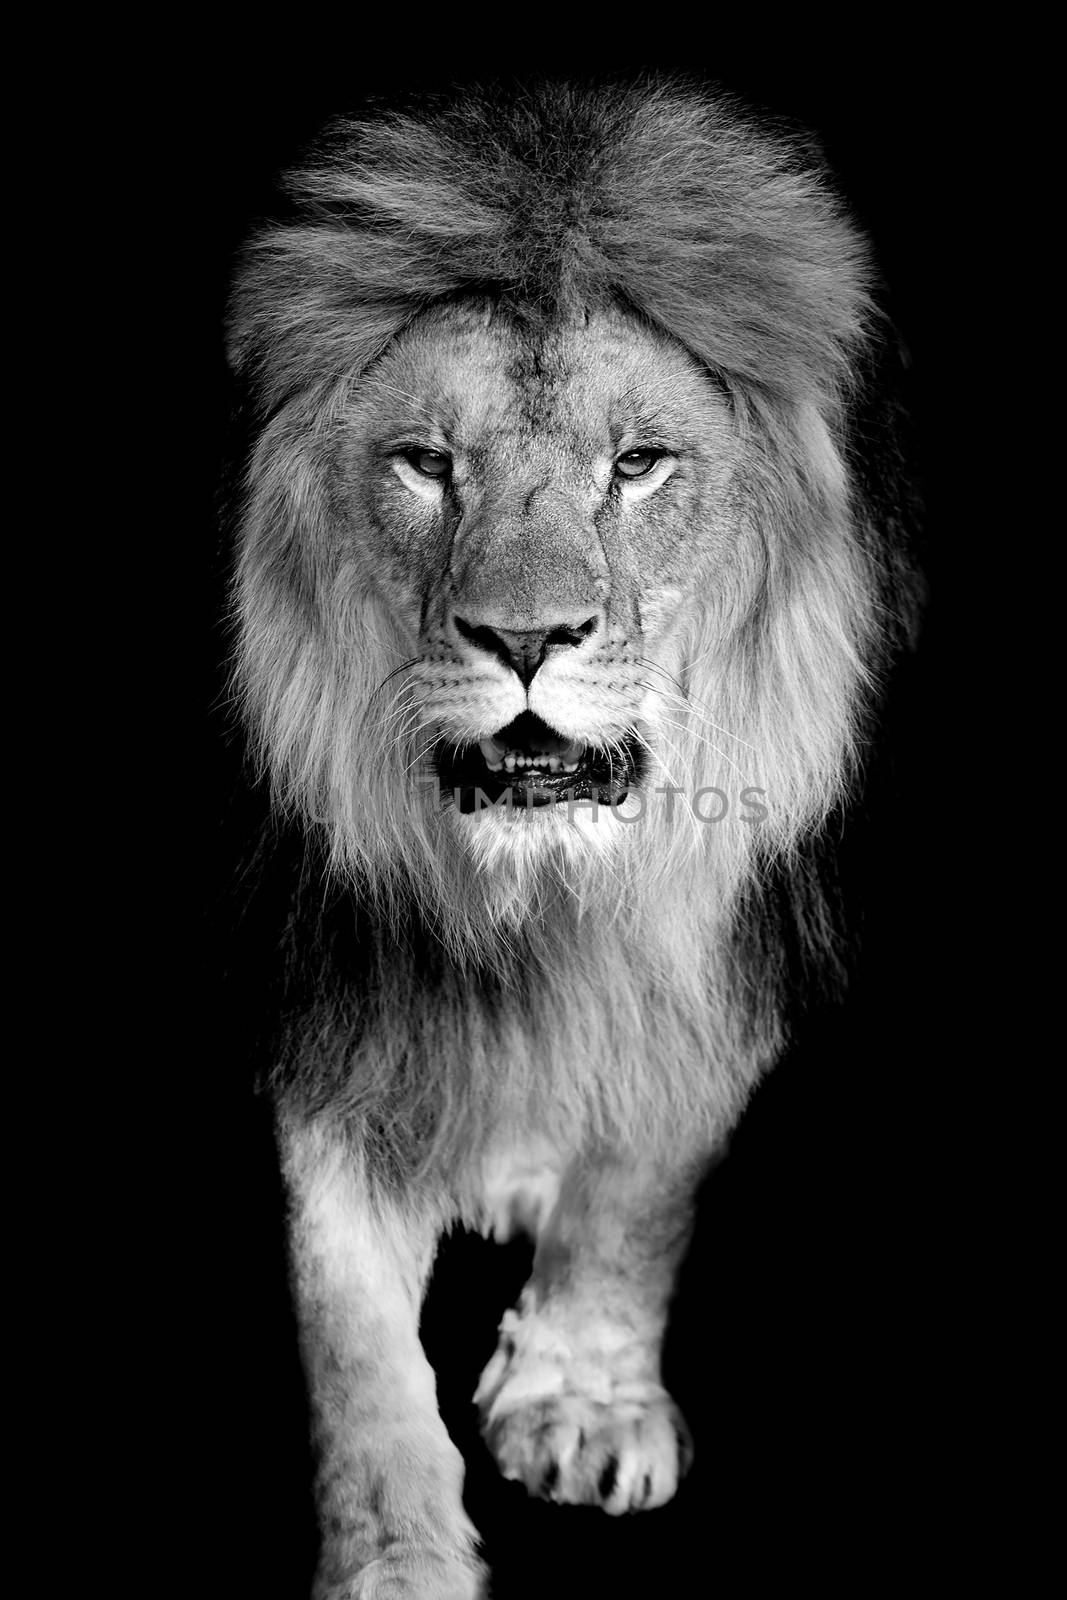 Lion on dark background. Black and white image